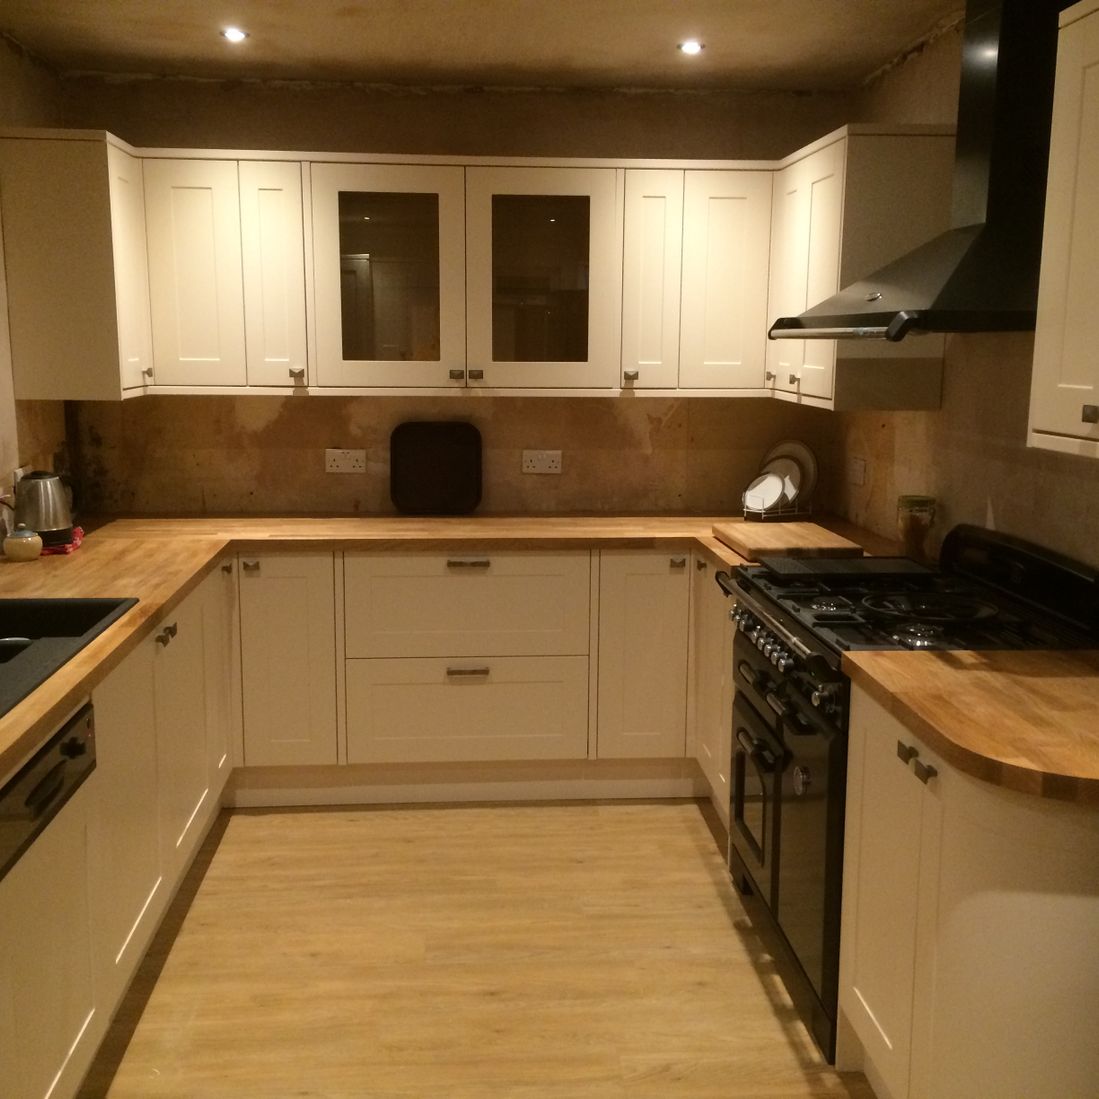 kitchens, kitchen design, kitchen ideas, kitchen fitting, fitted kitchens